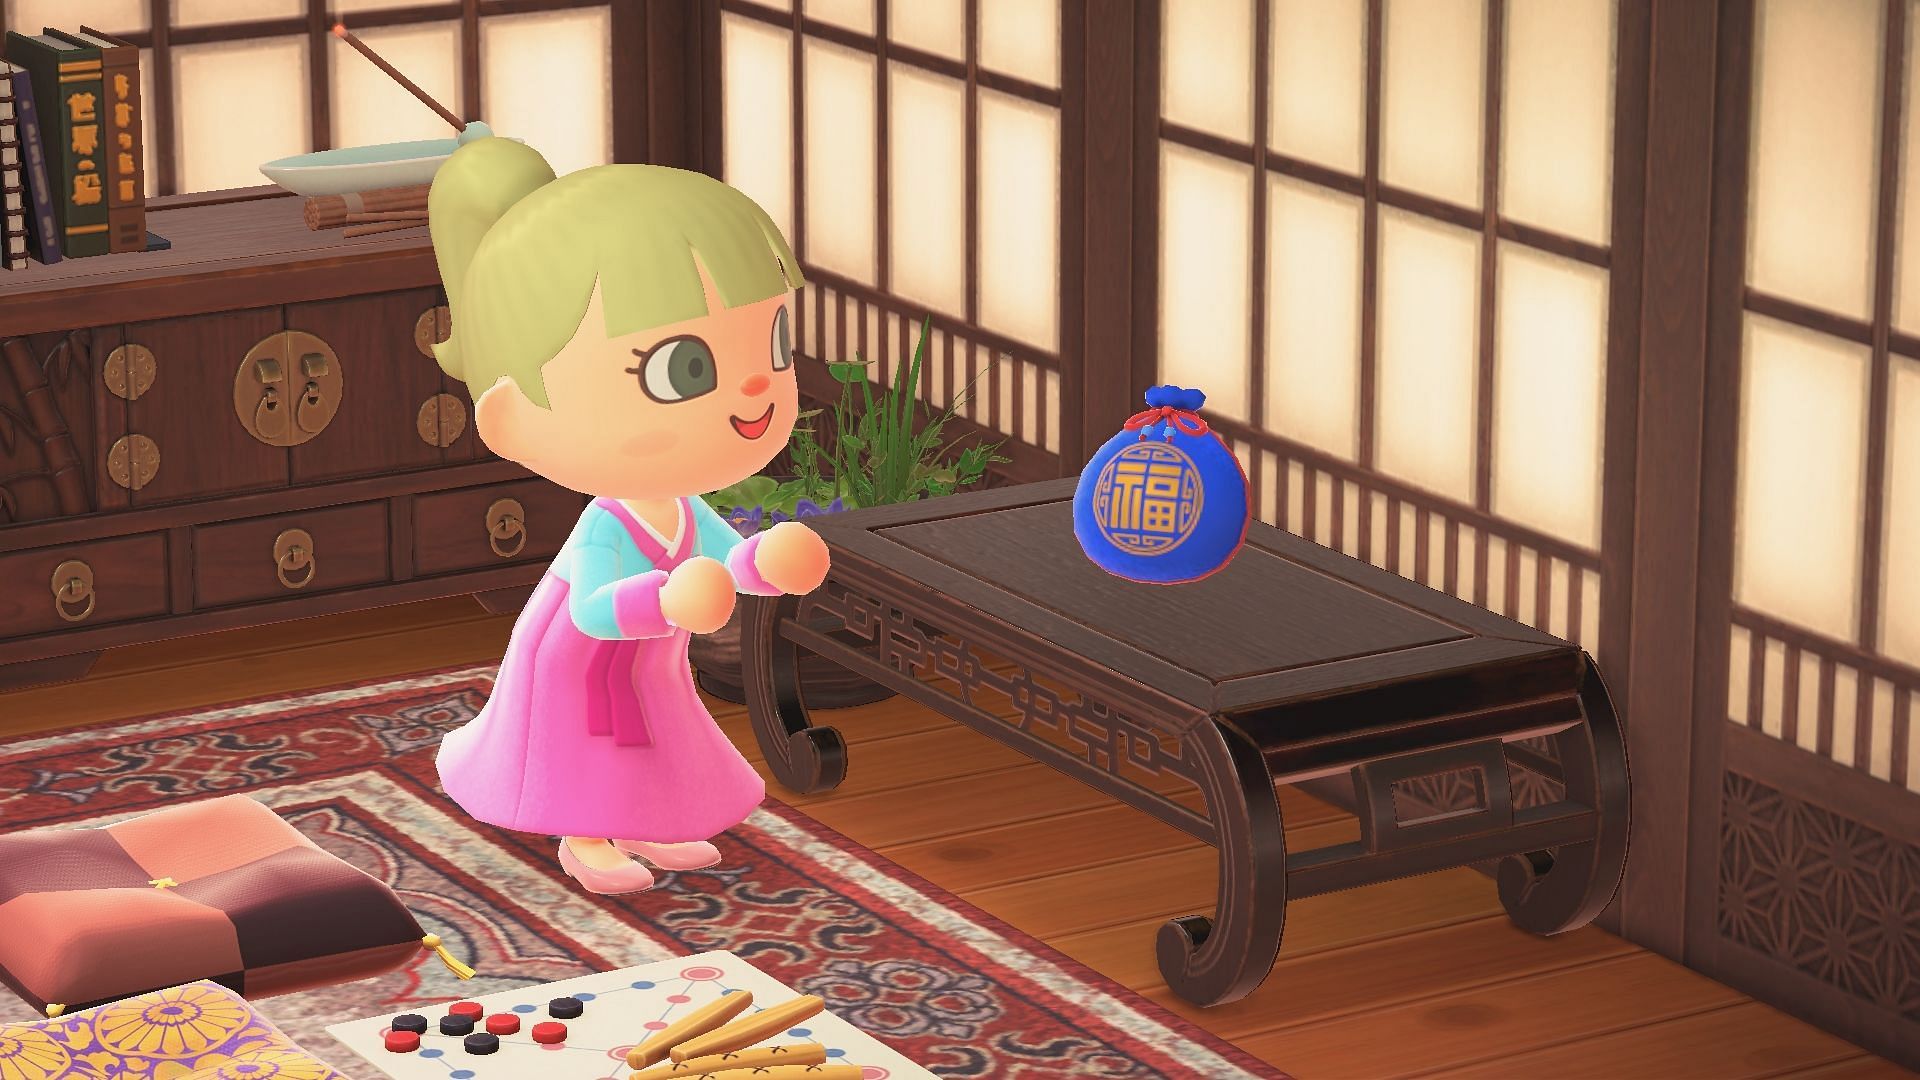 Lunar year in Animal Crossing: New Horizons (Image via Nintendo)